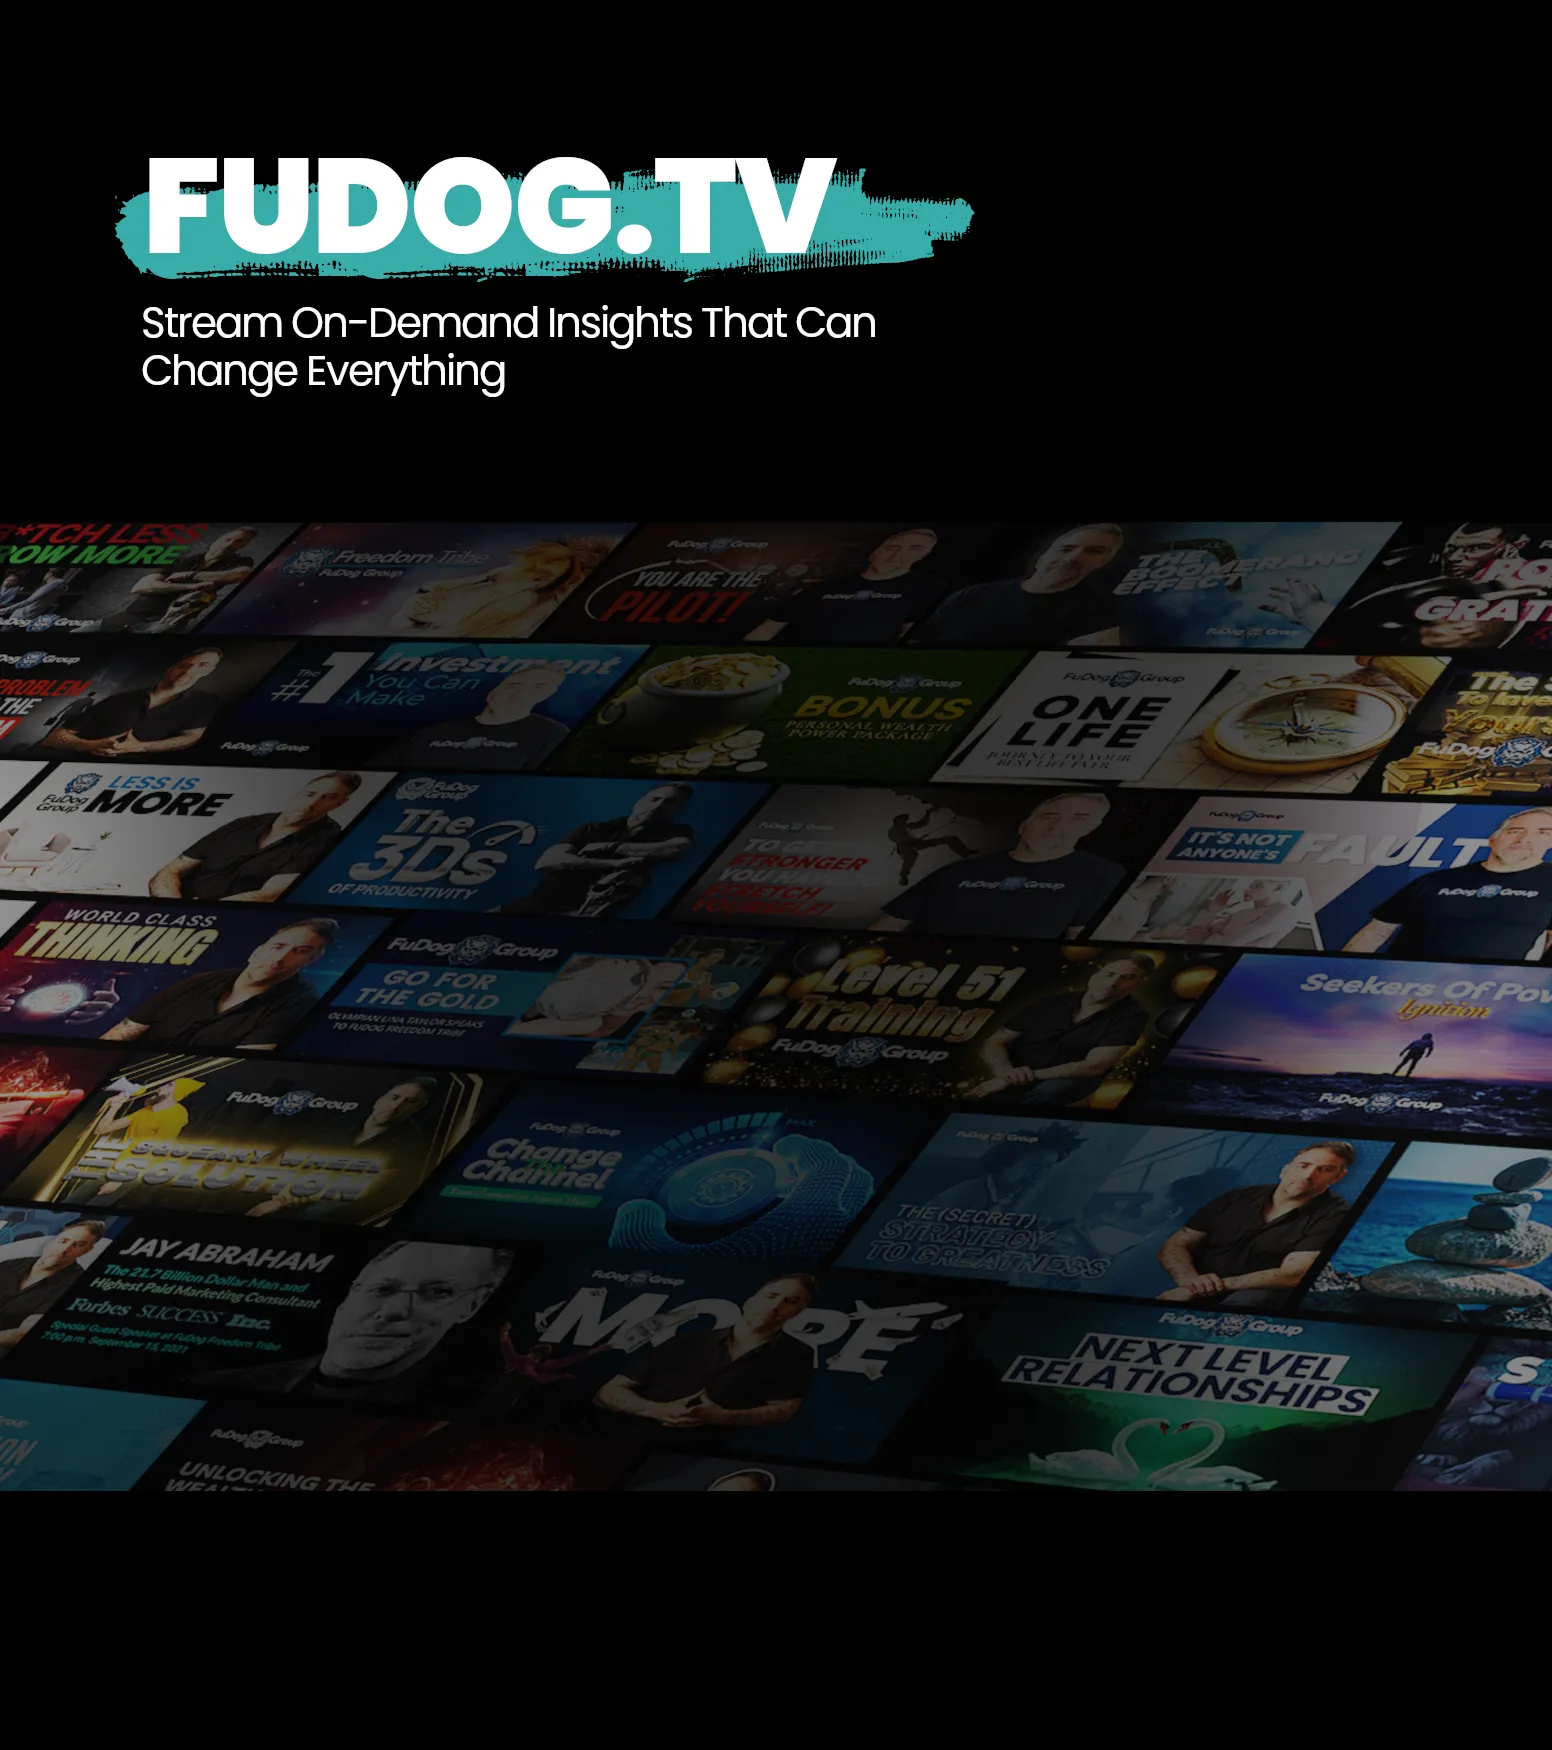 FuDog.TV